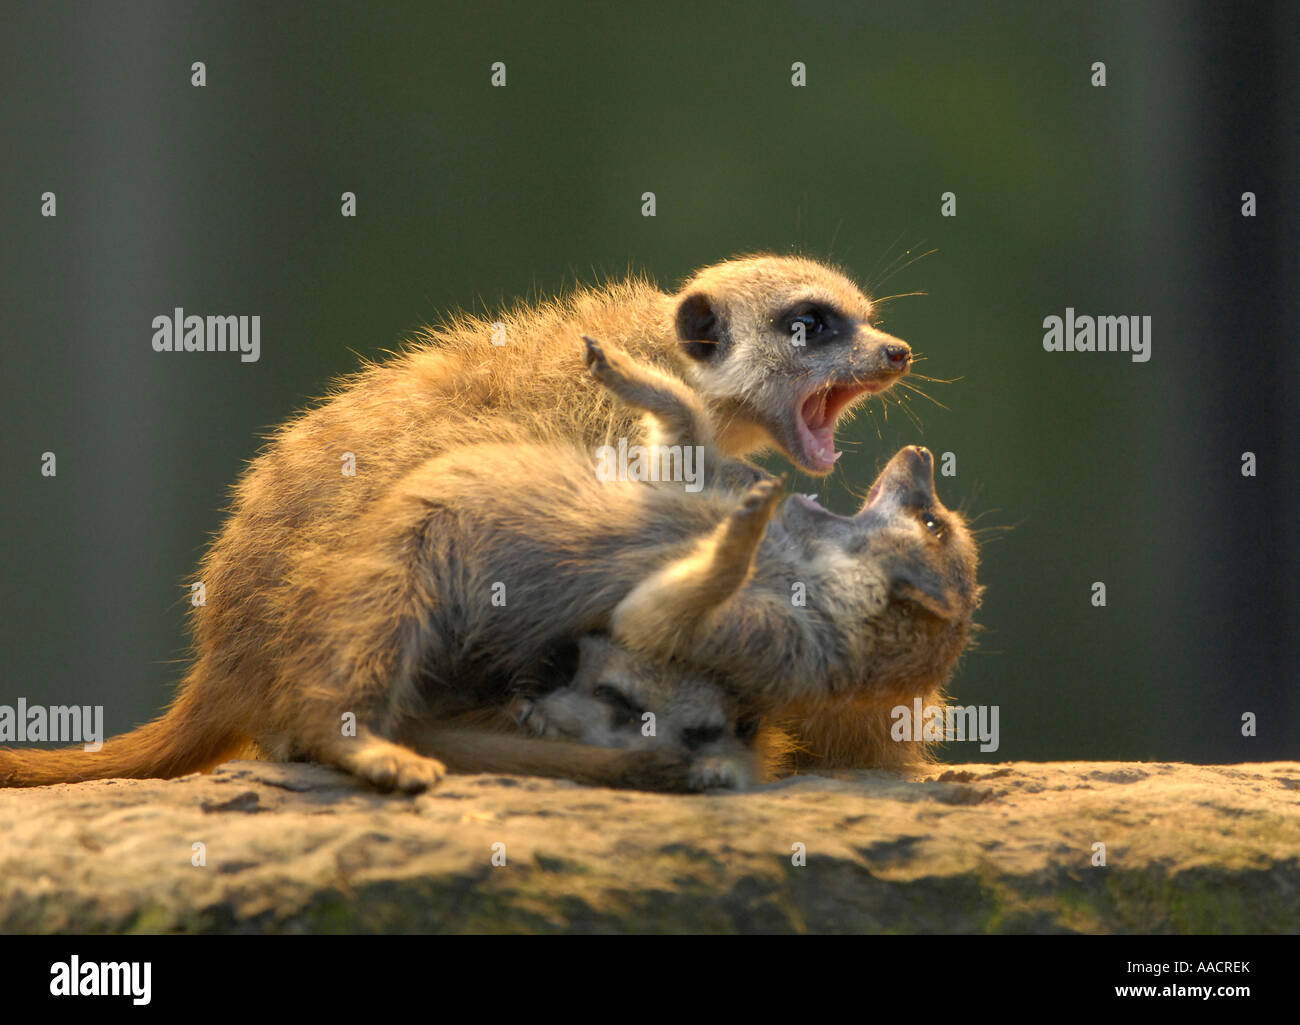 Young meerkats (Suricata suricatta) at play Stock Photo